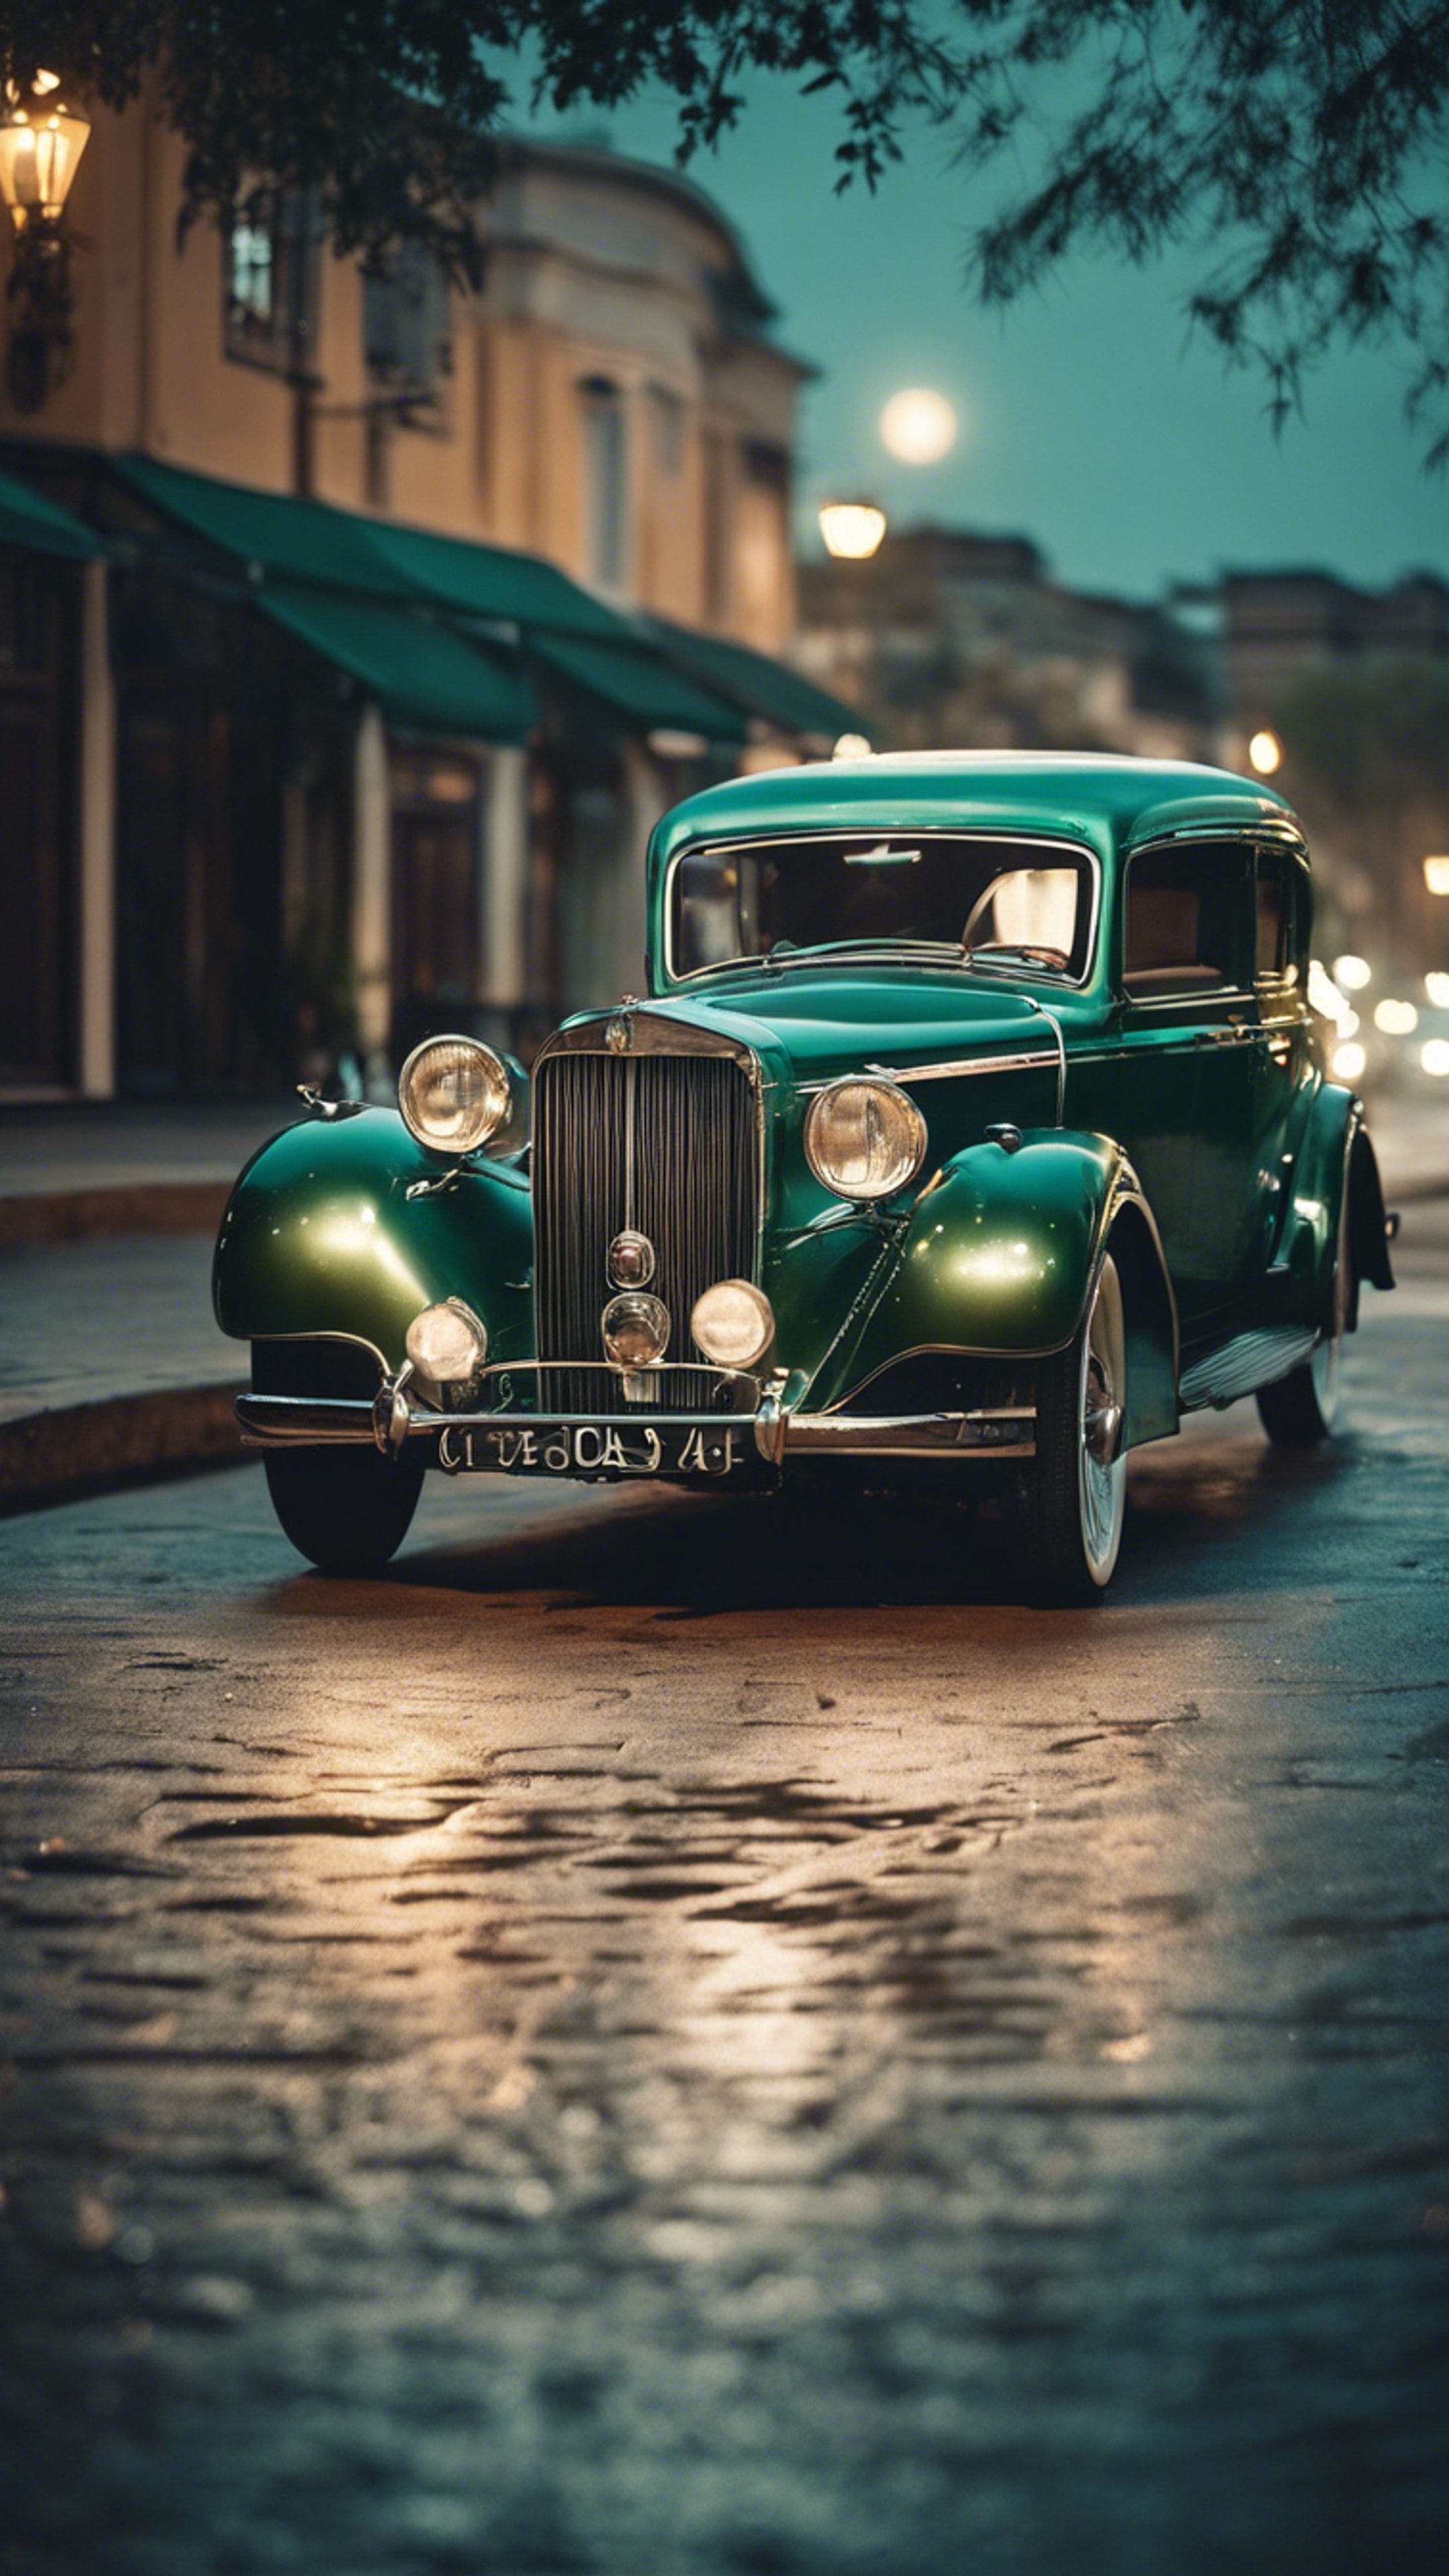 A luxurious antique car painted in cool dark green under the moonlight. Wallpaper[5cdba2e68b66456f8c5a]